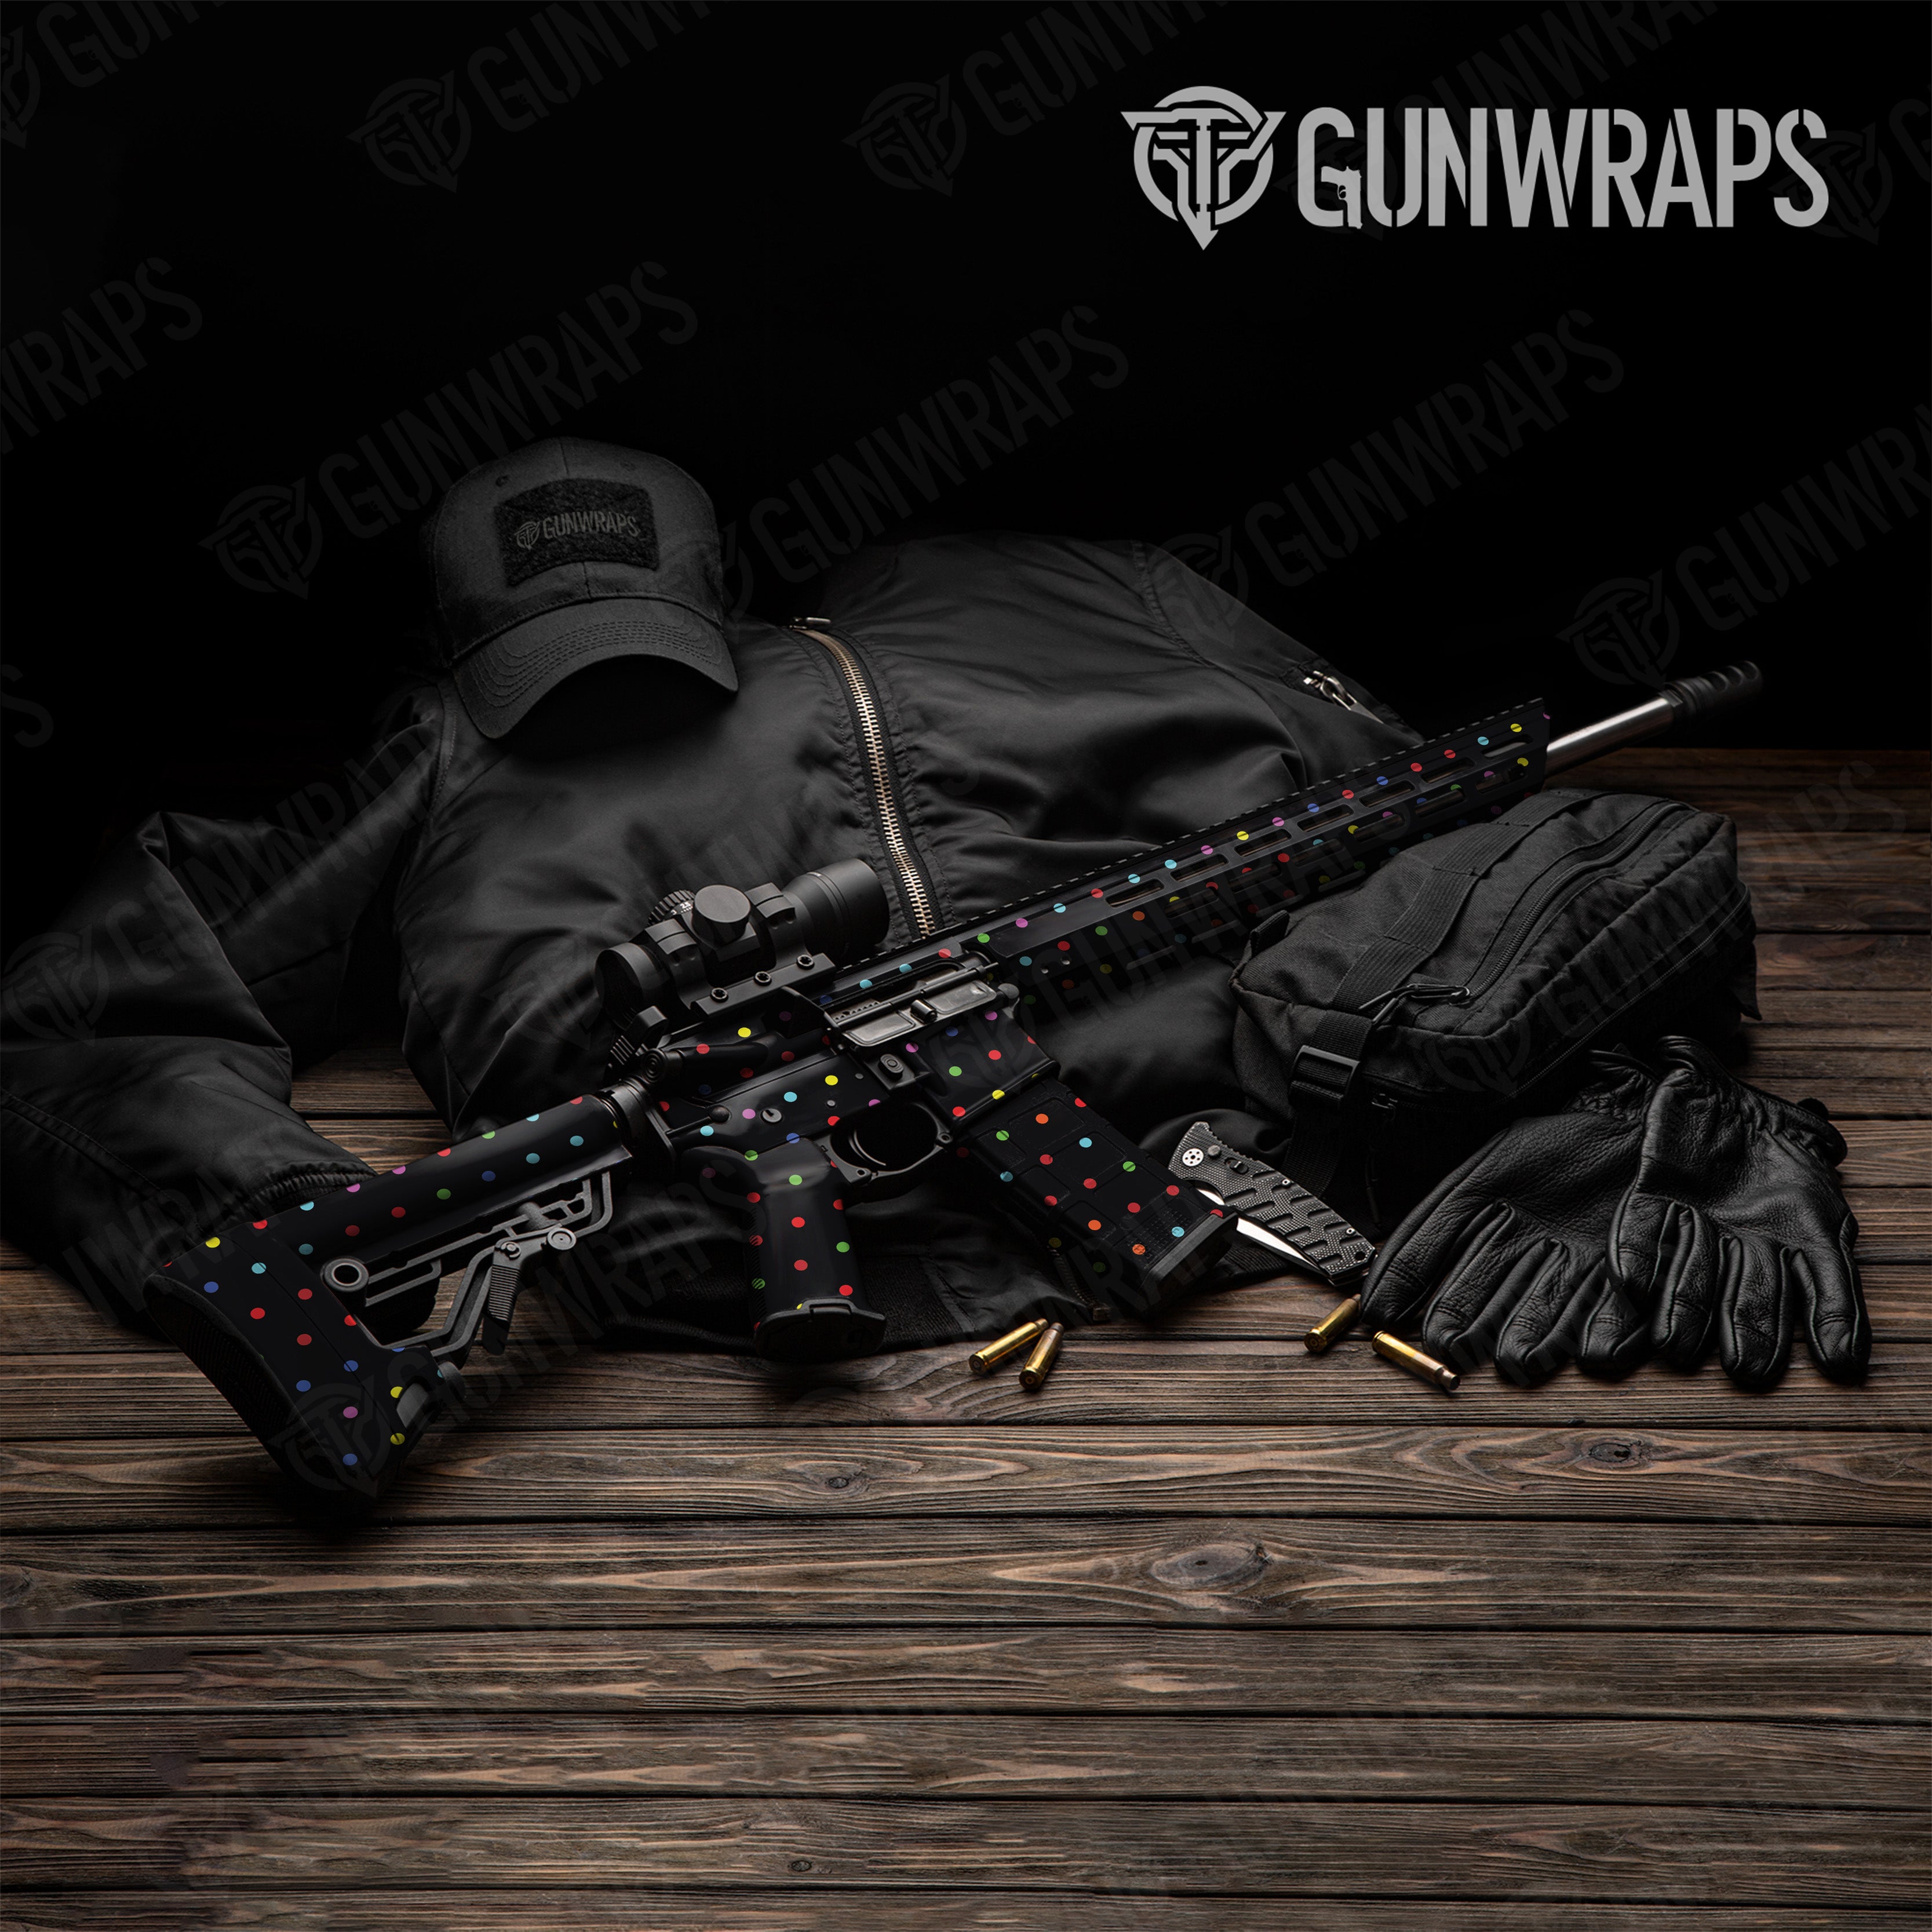 AR 15 Dotted Multicolor Gun Skin Pattern